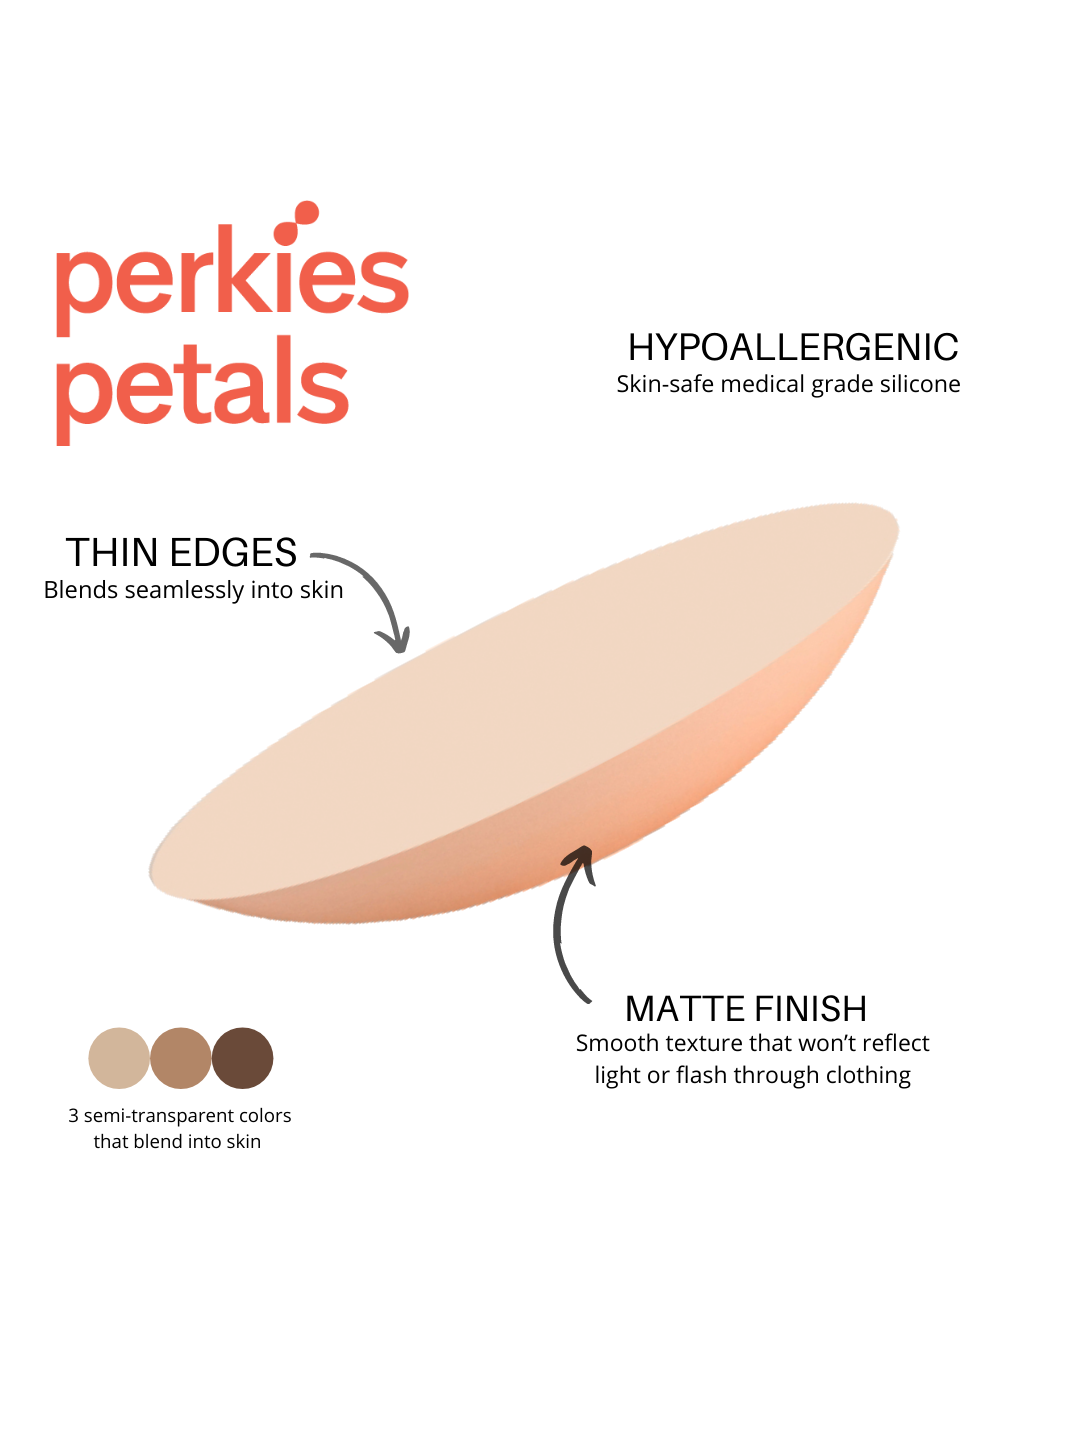 Perkies Petals - Thin Edges, Matte Finish, Hypoallergenic